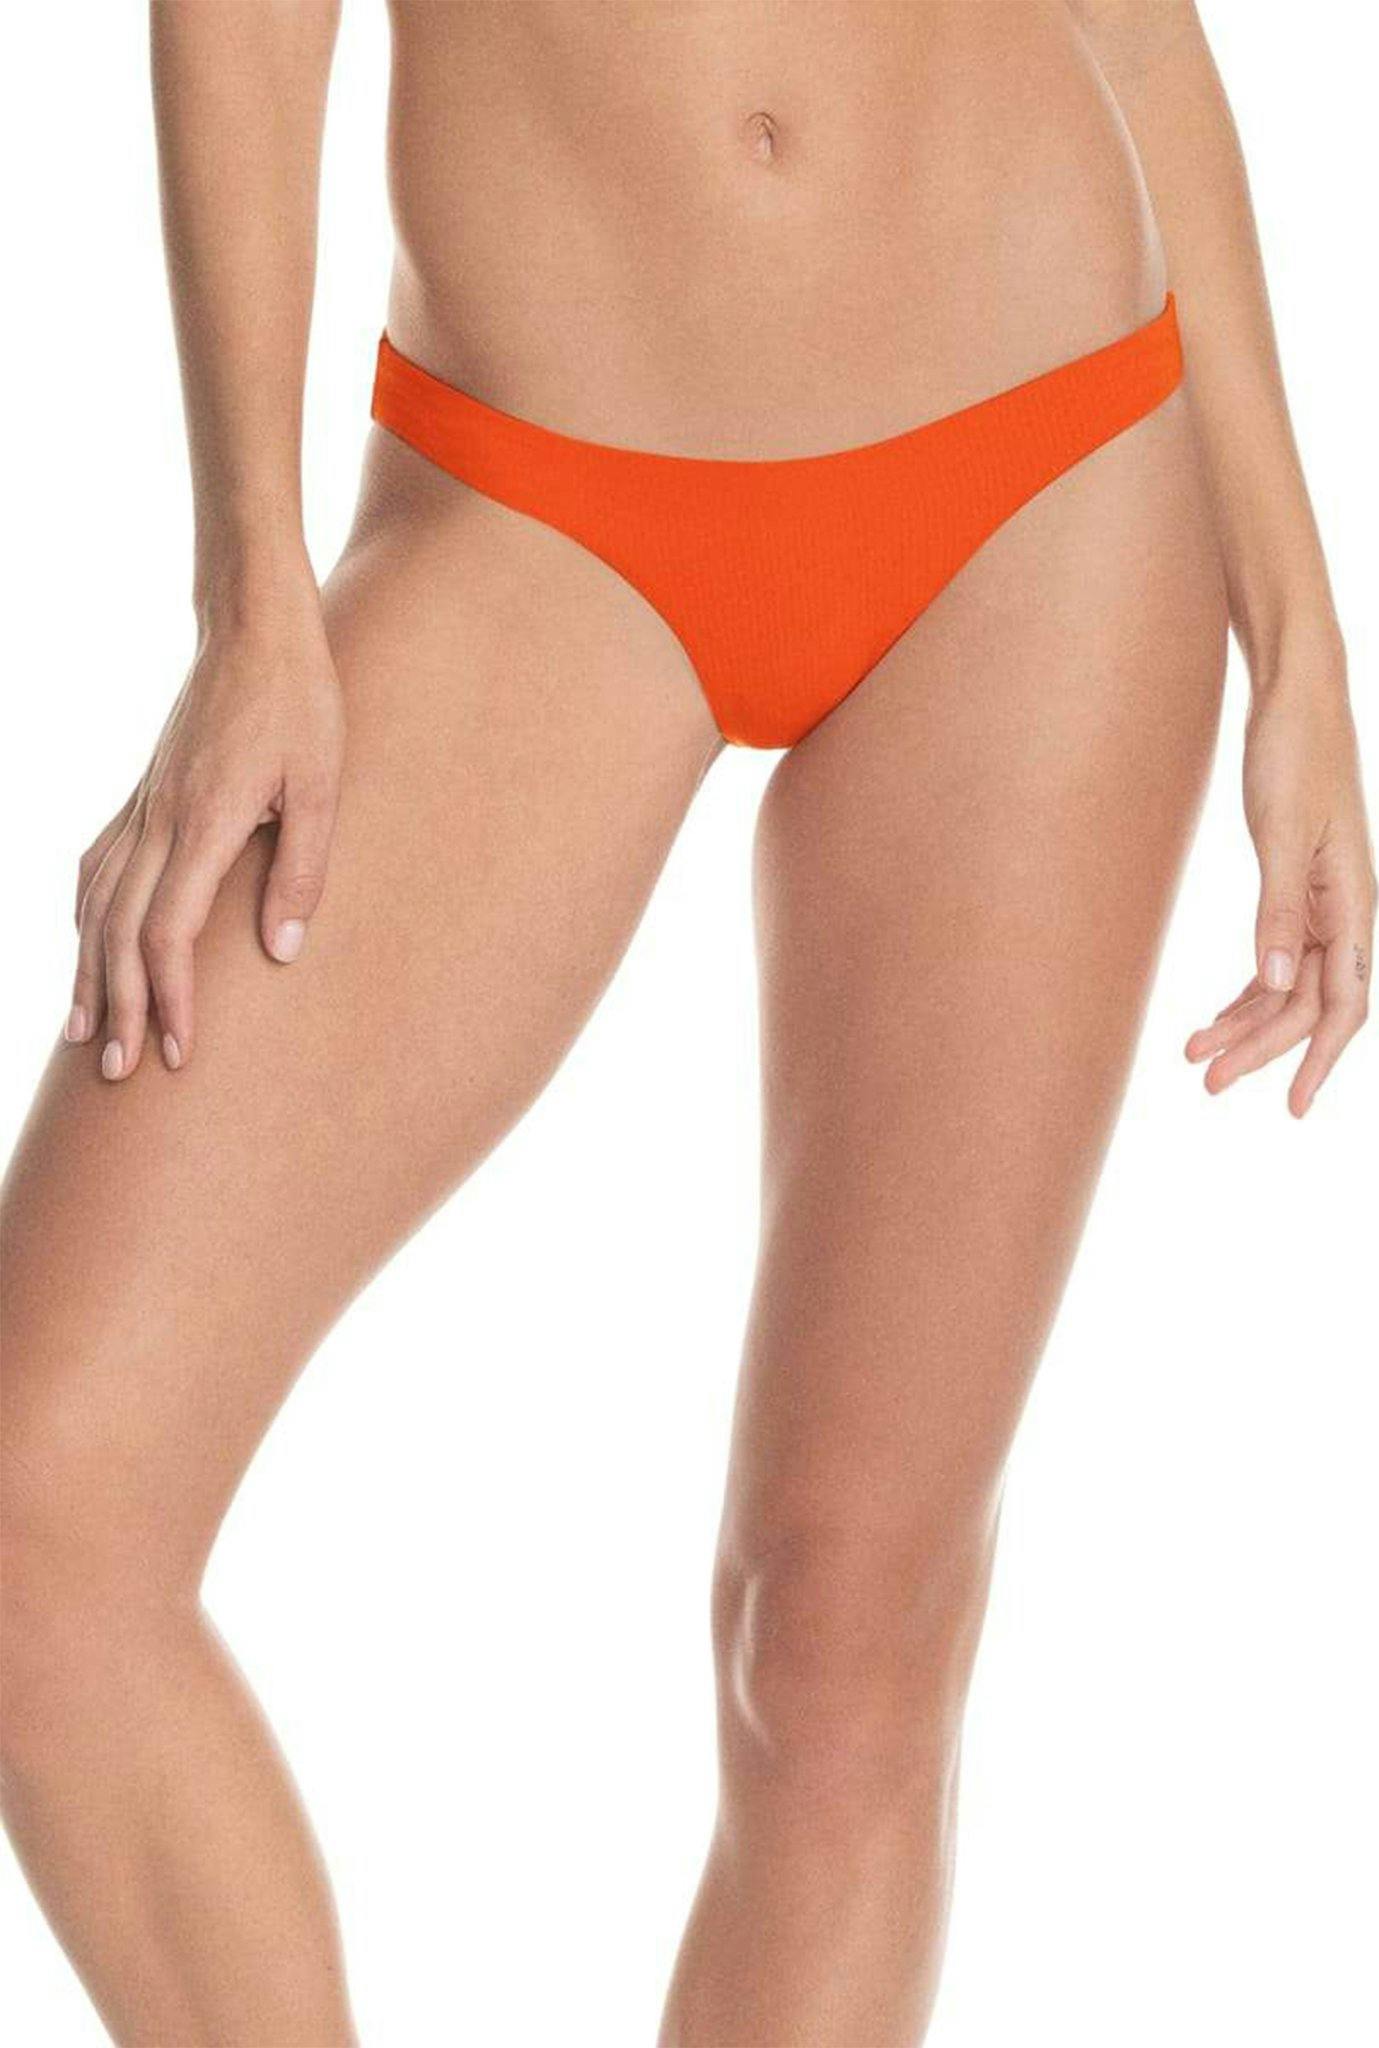 Product gallery image number 3 for product Ginger Orange Flirt Thin Side Cheeky Cut Bikini Bottom - Women's